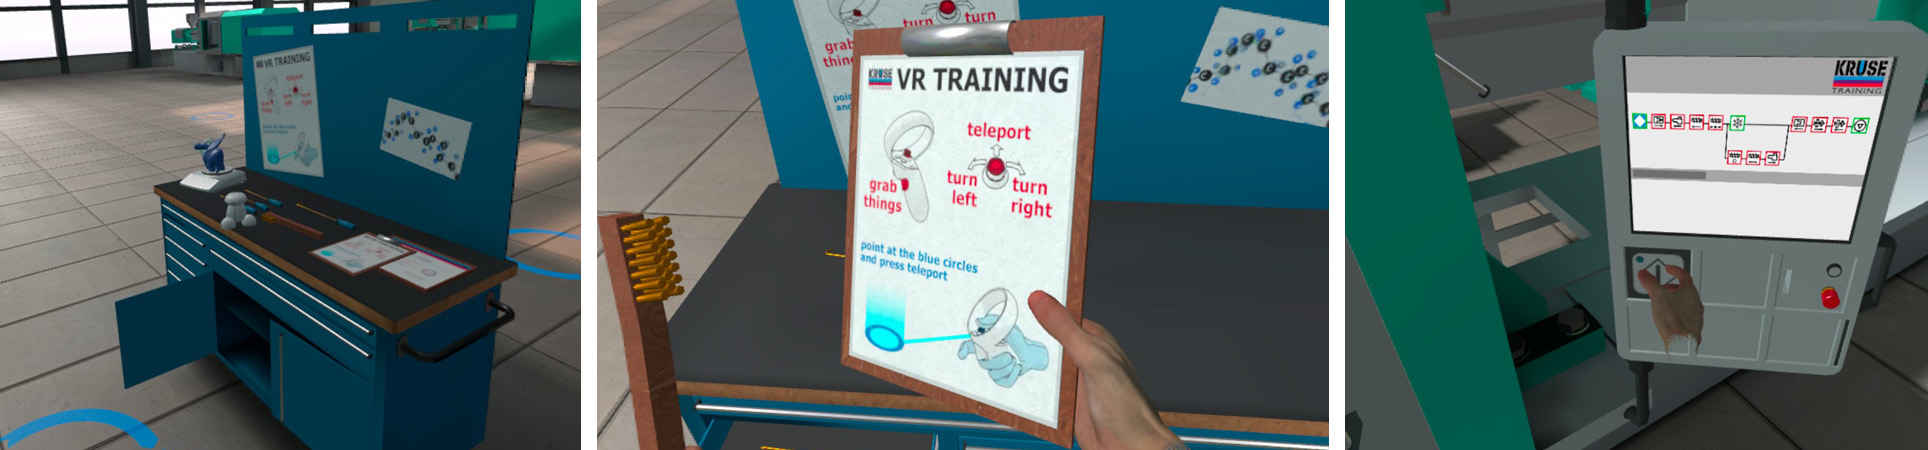 Kruse Training Virtual Reality Molding Floor